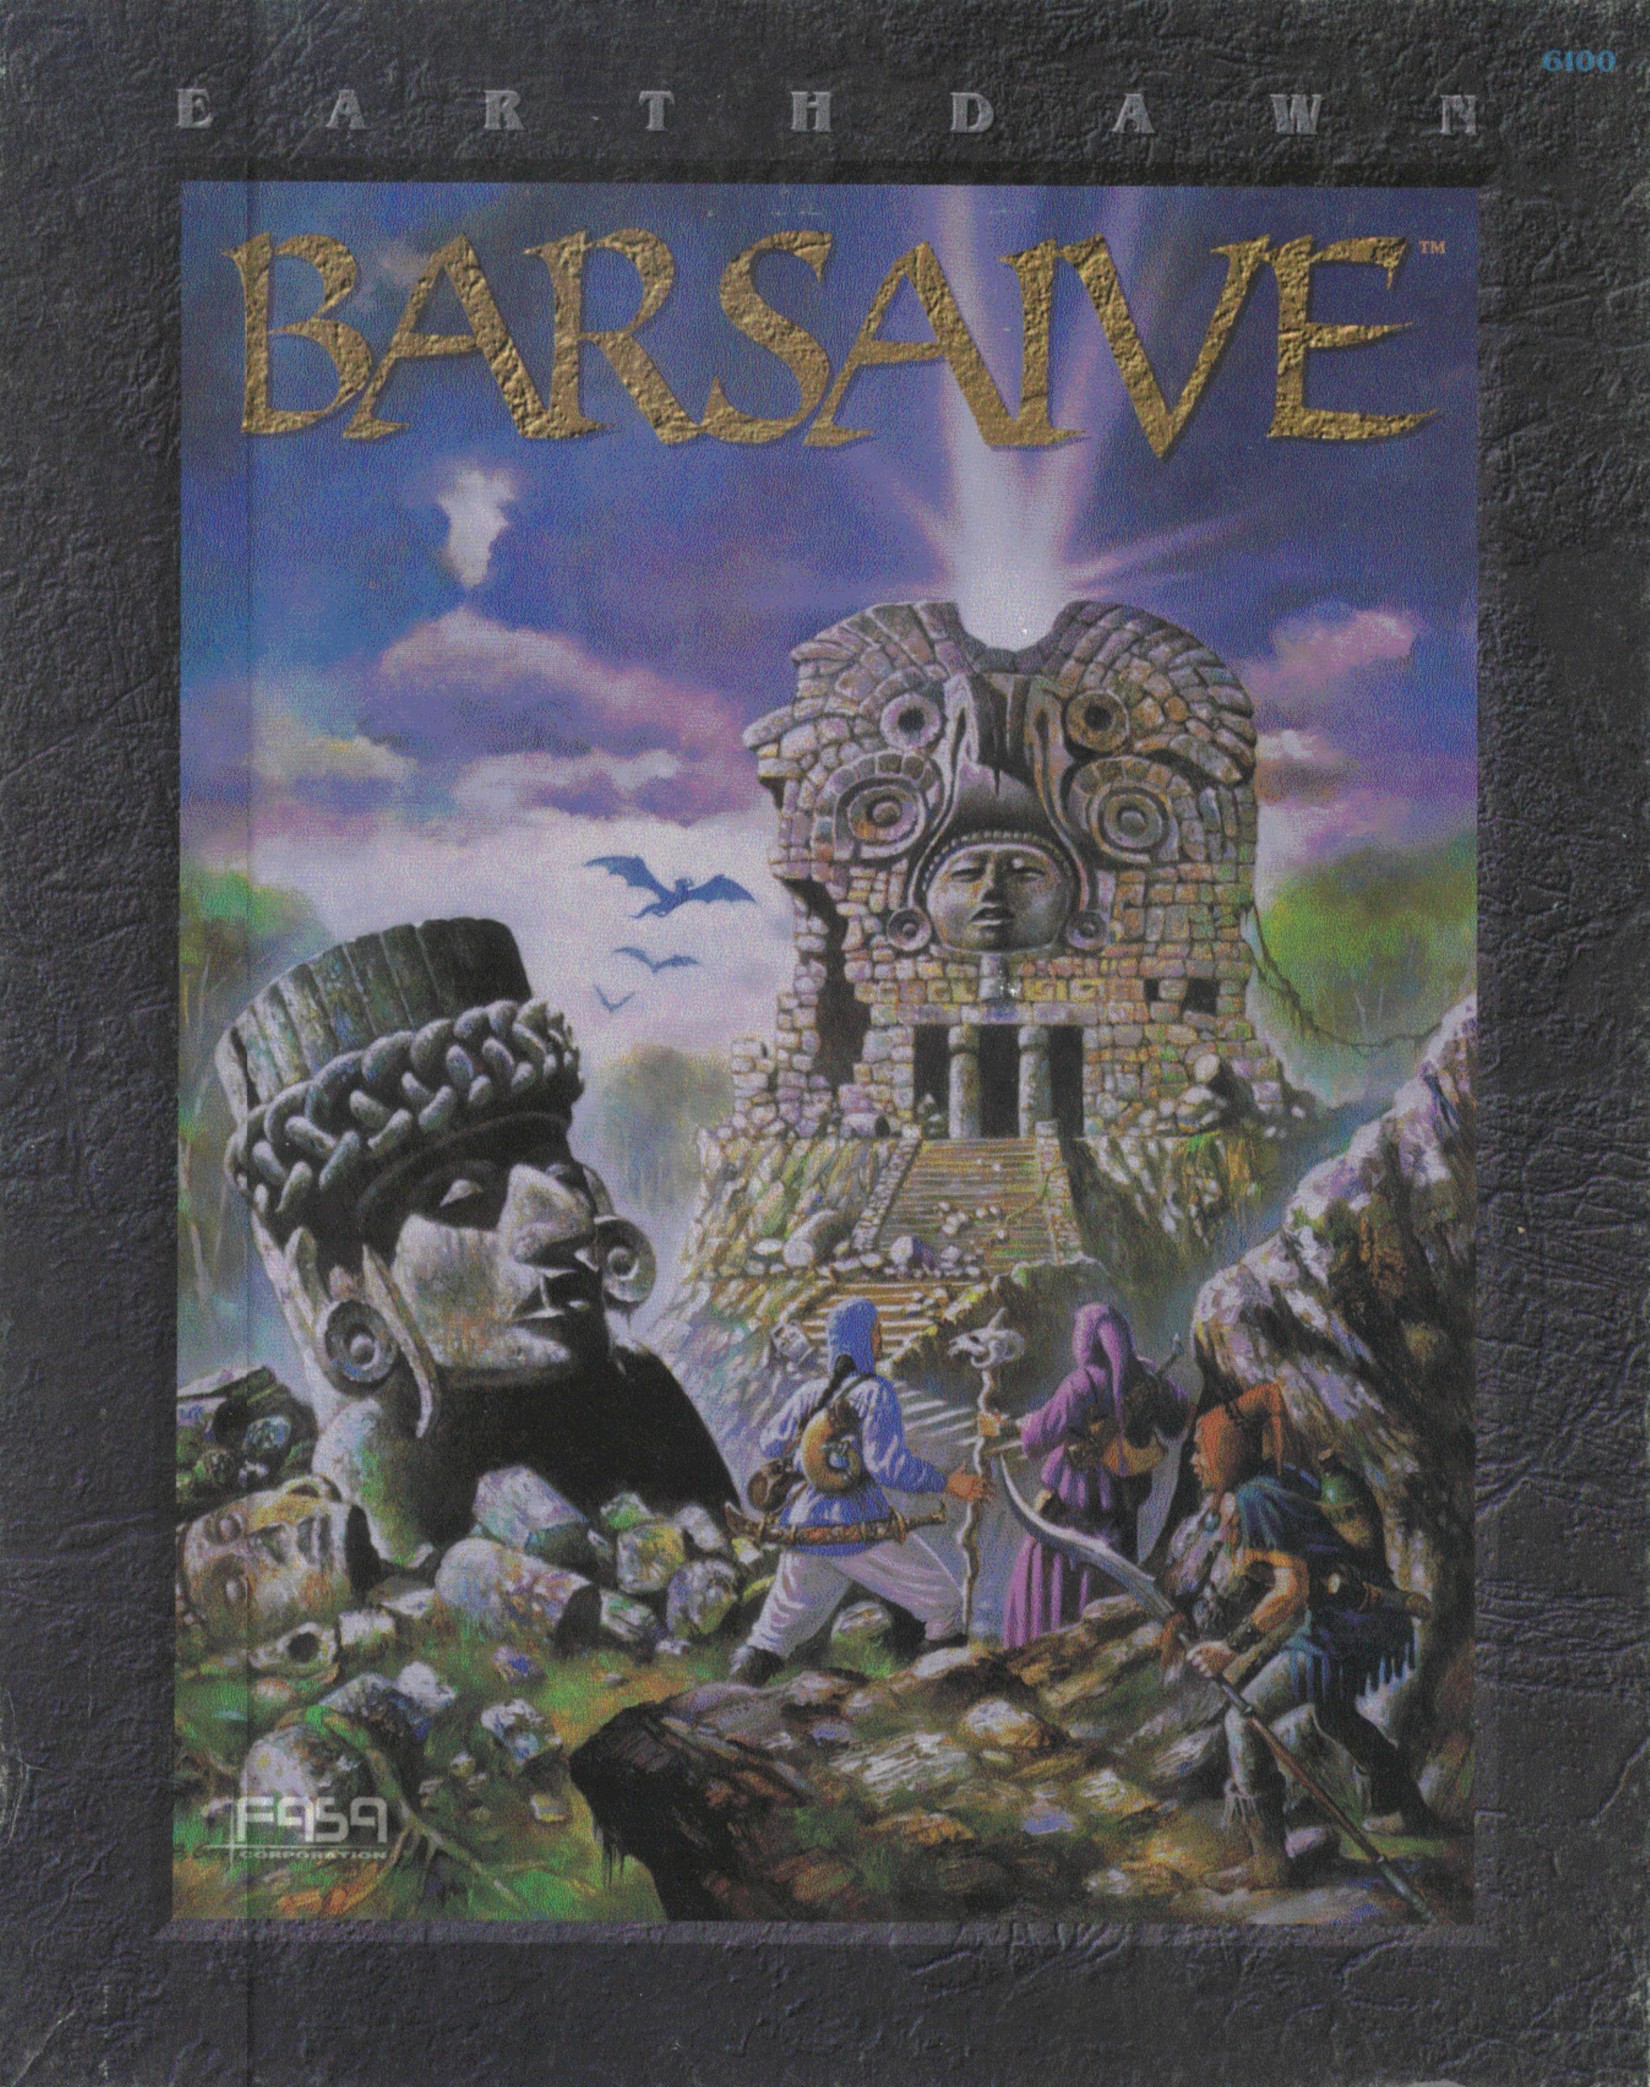 6100 Barsaive Boxed Set